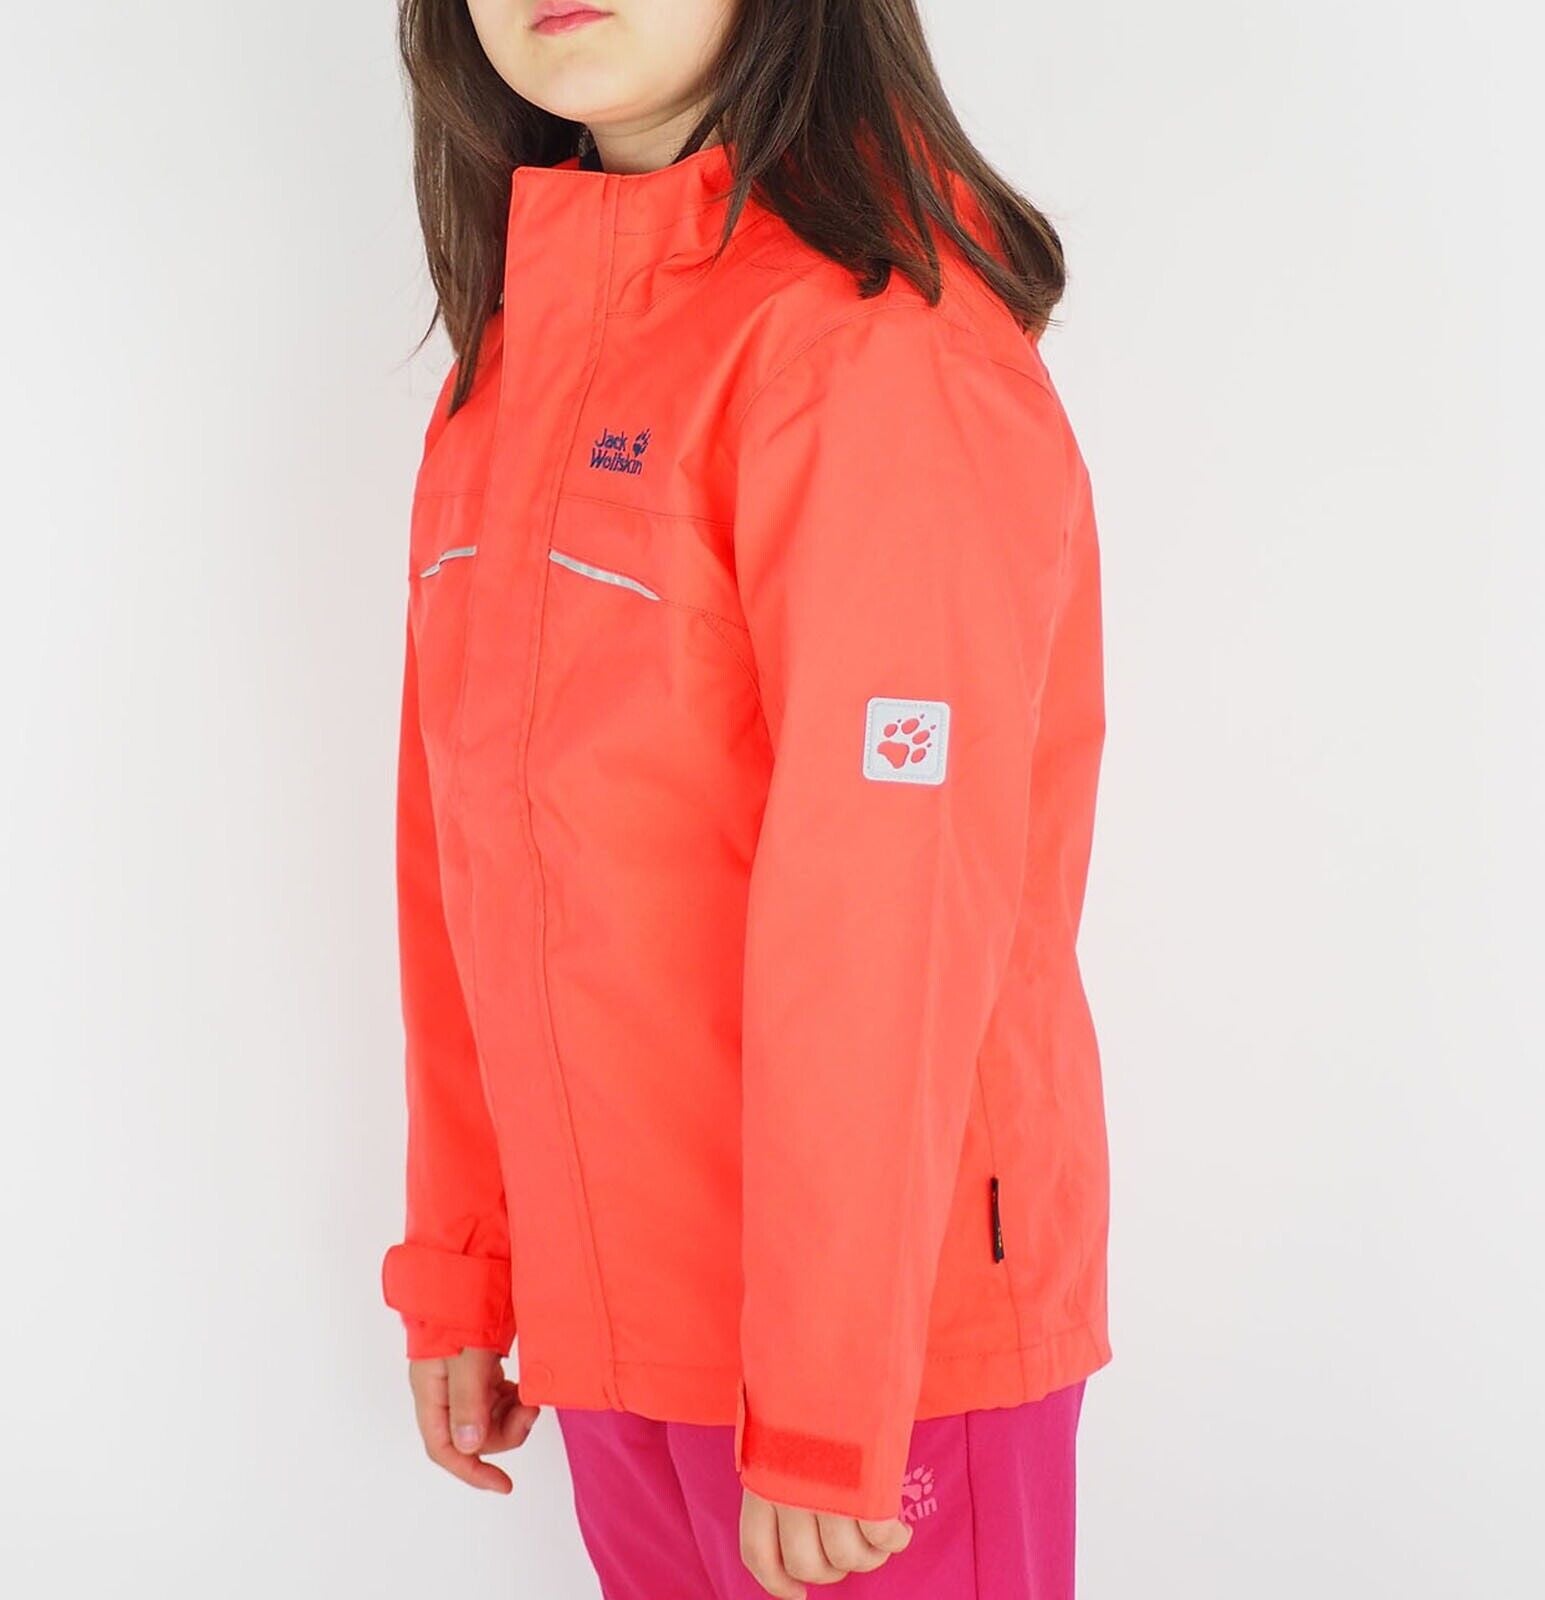 Girls Jack Wolfskin Topaz Texapore 1604772 Hot Coral Waterproof Jacket - London Top Style